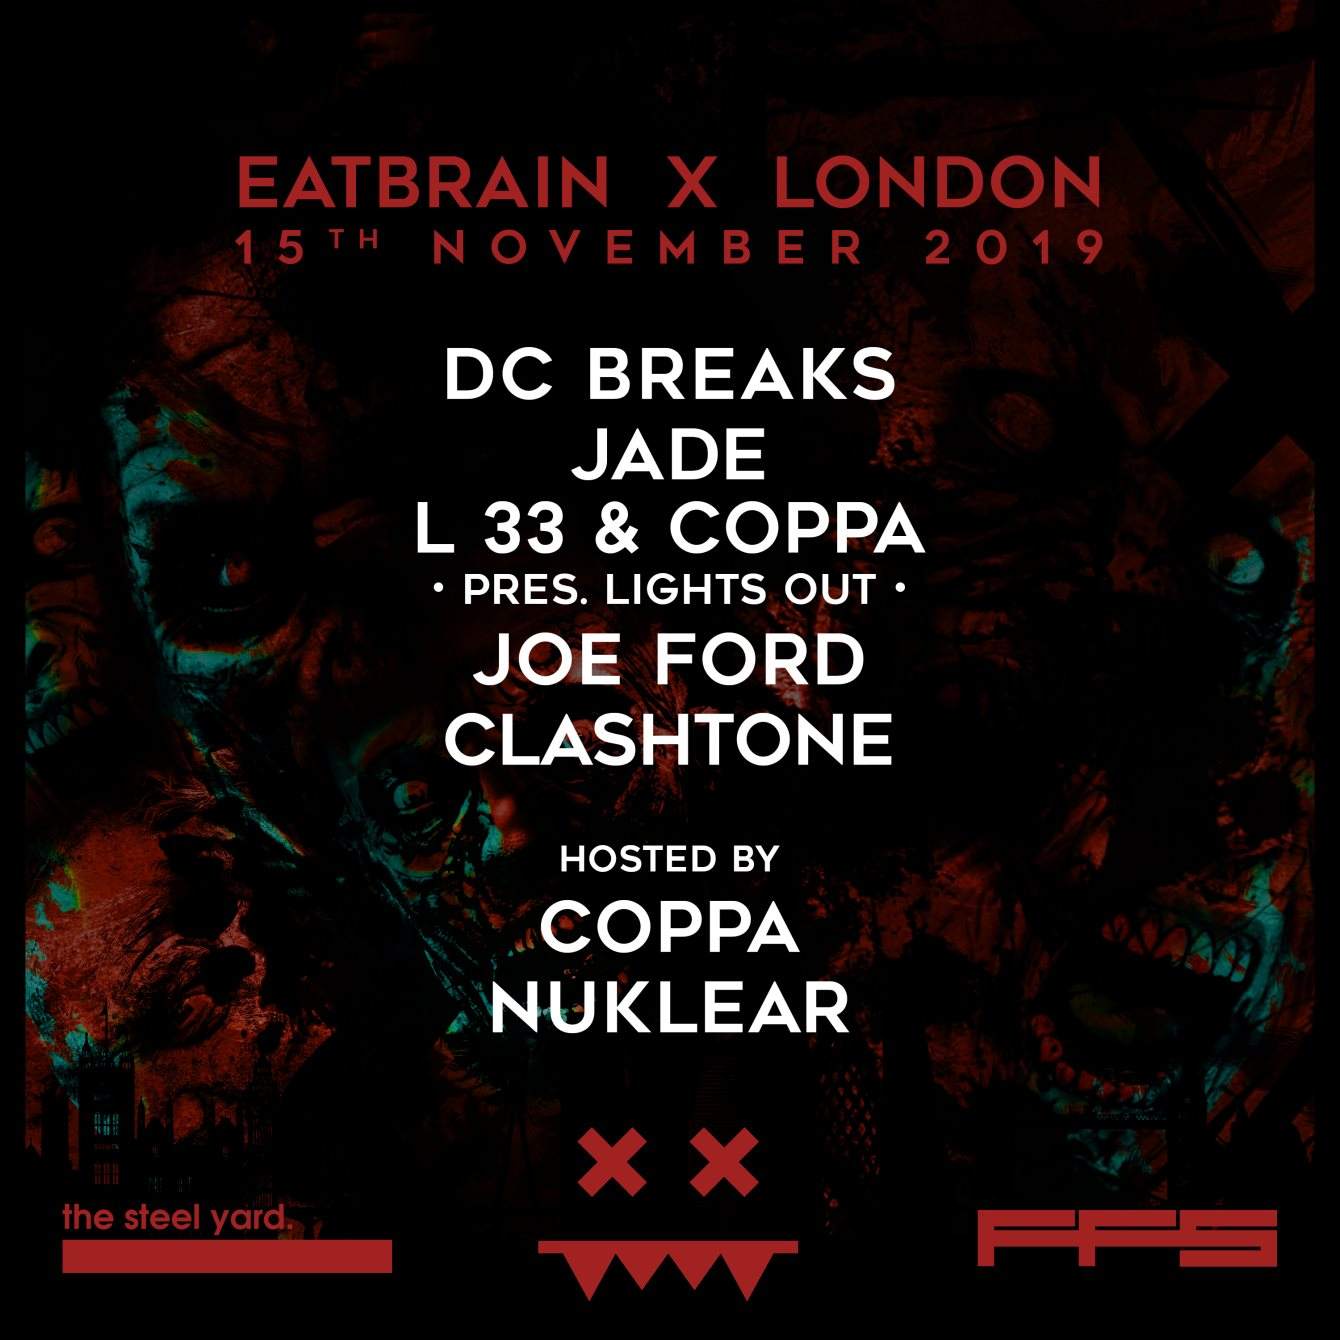 Eatbrain x London - フライヤー裏